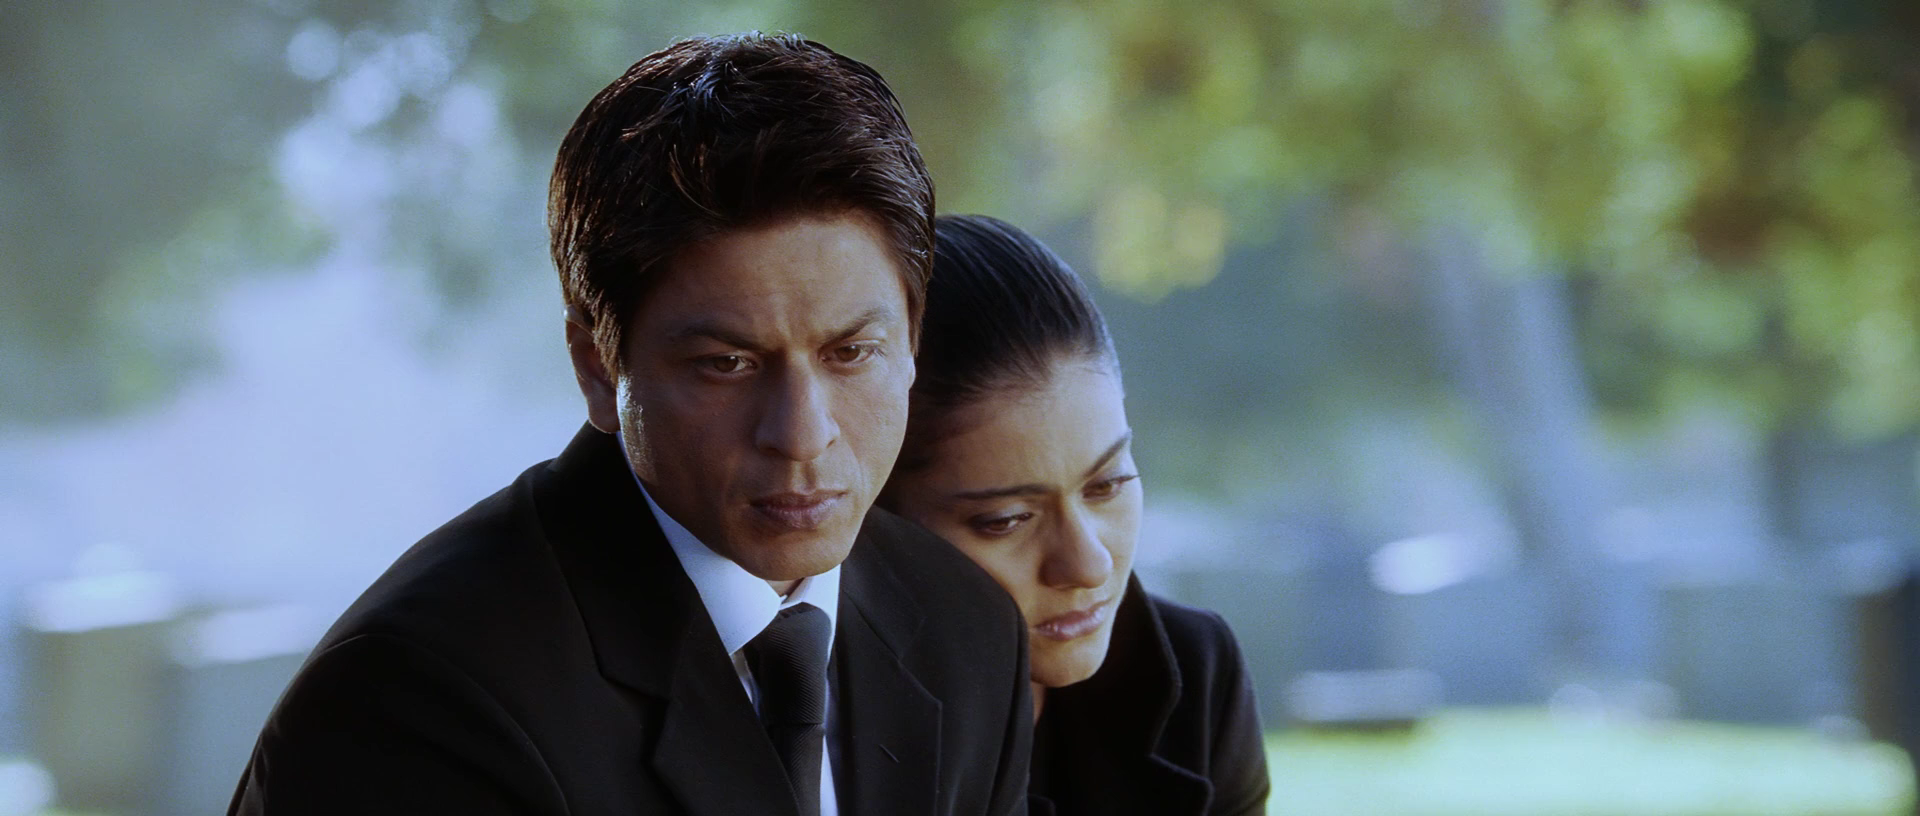 دانلود فیلم هندی My Name Is Khan 2010